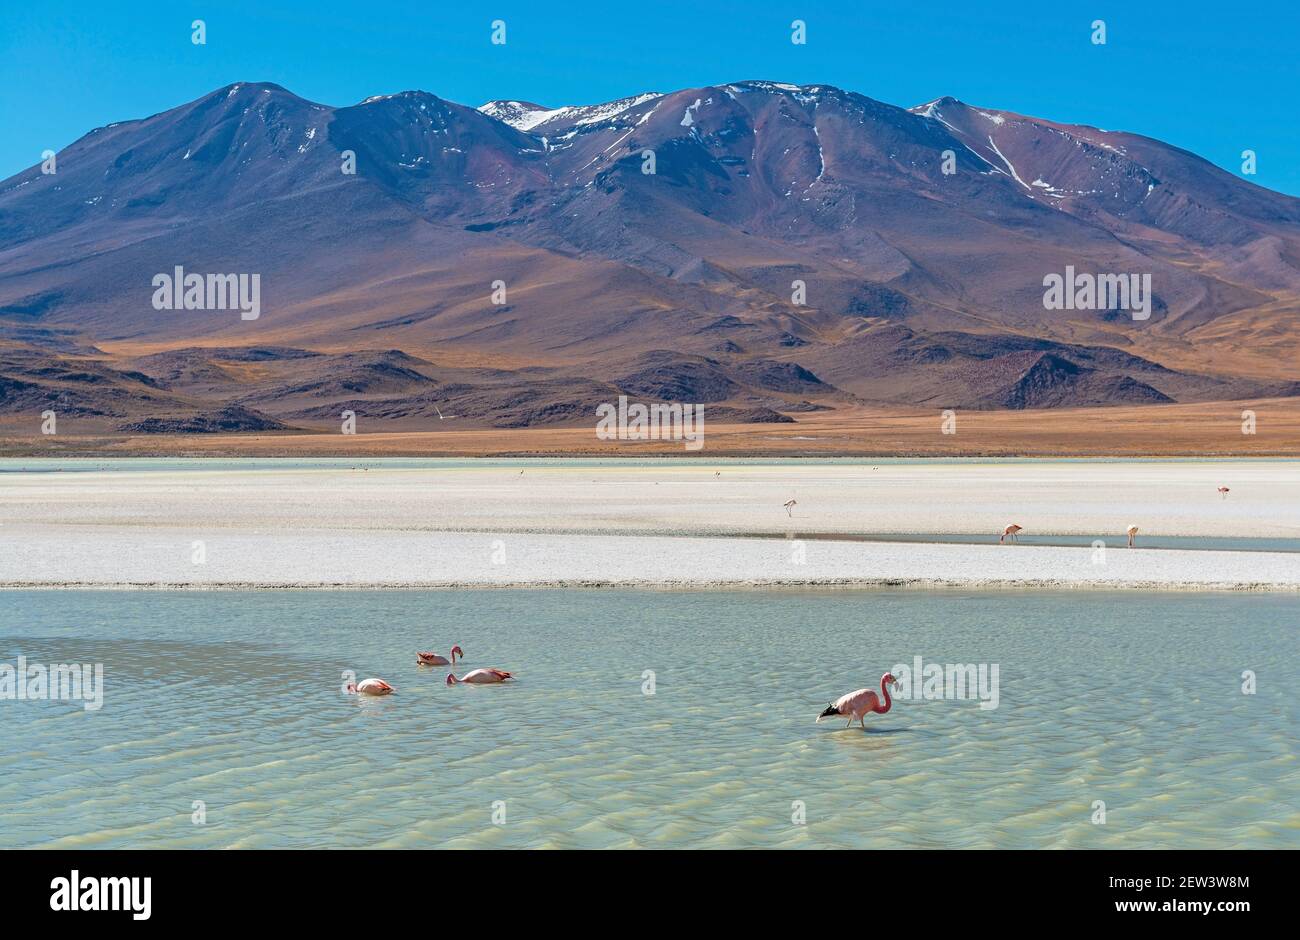 Canapa lagoon landscape with James Flamingo (Phoenicoparrus jamesi) and Andes mountain peaks, Uyuni, Bolivia. Stock Photo